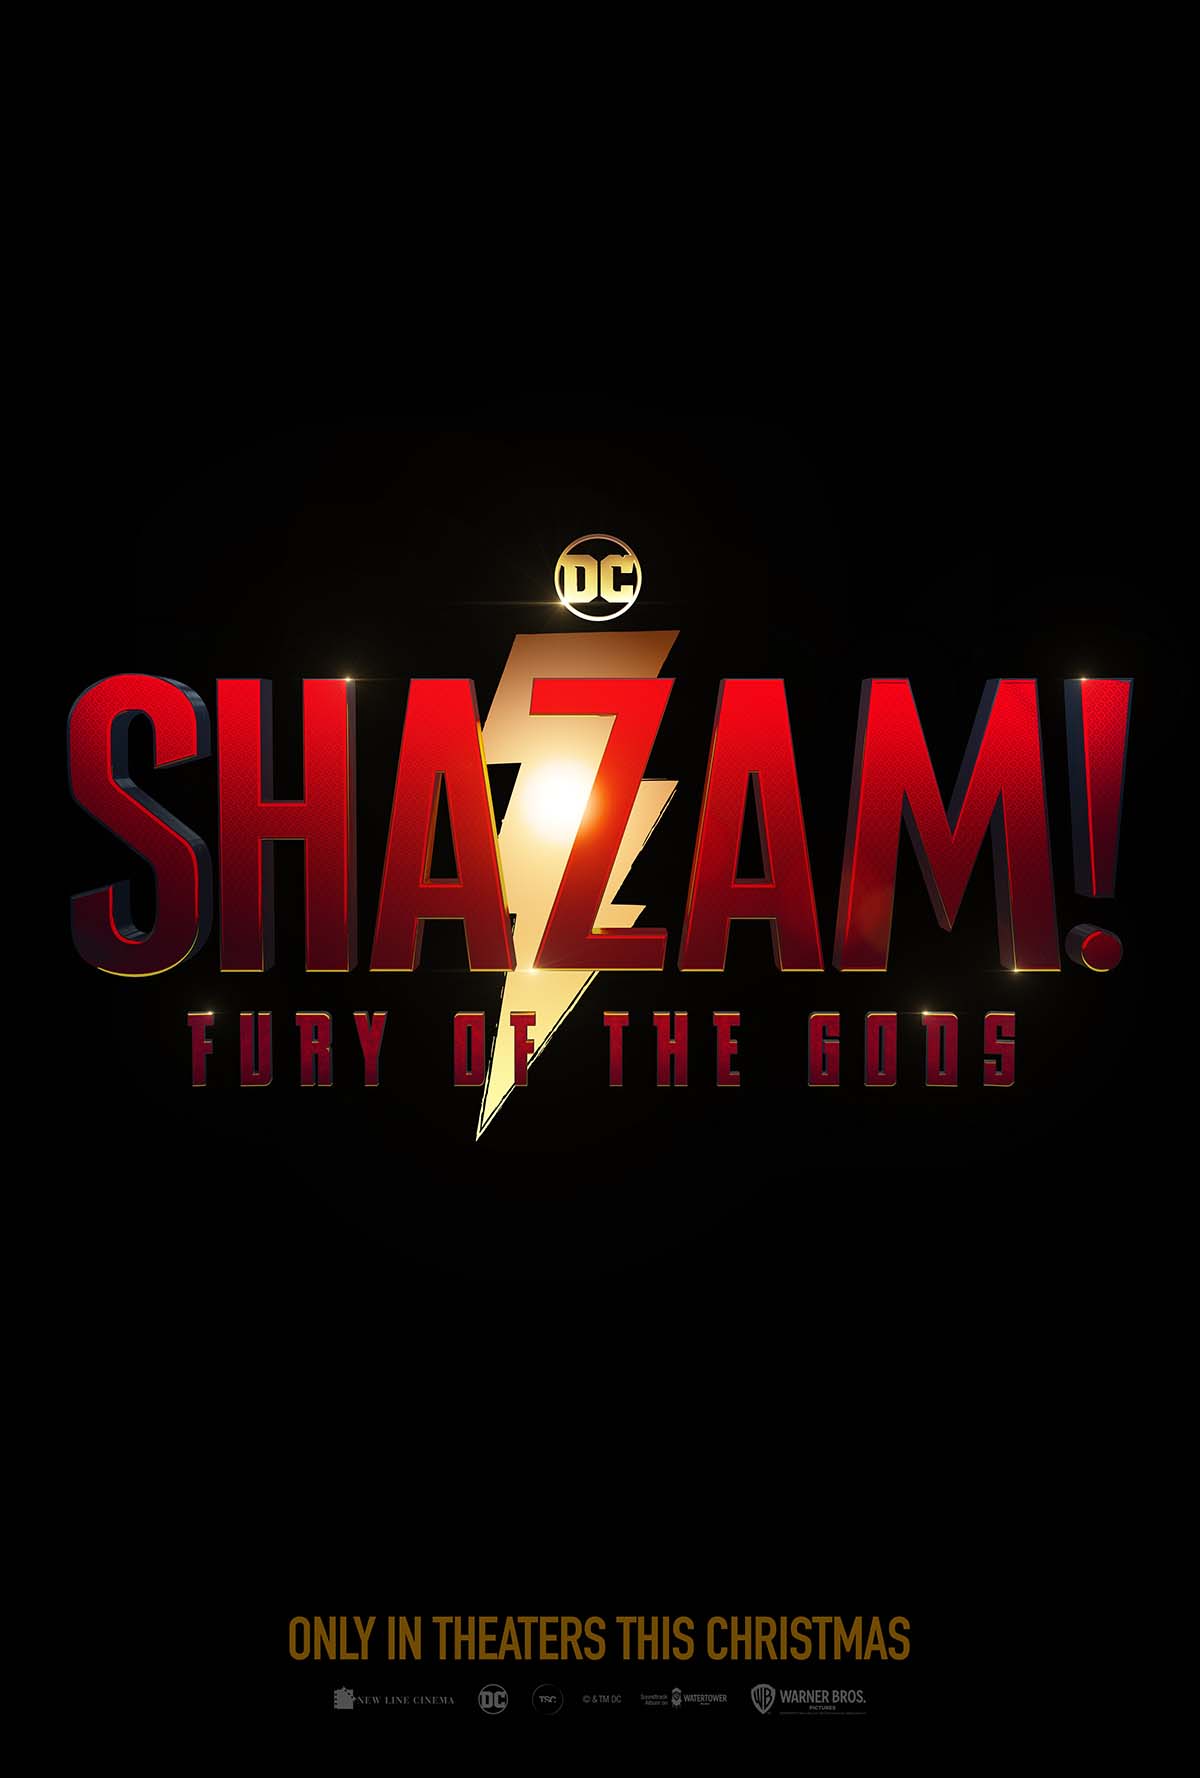 Everything we know about Shazam! Fury of the Gods